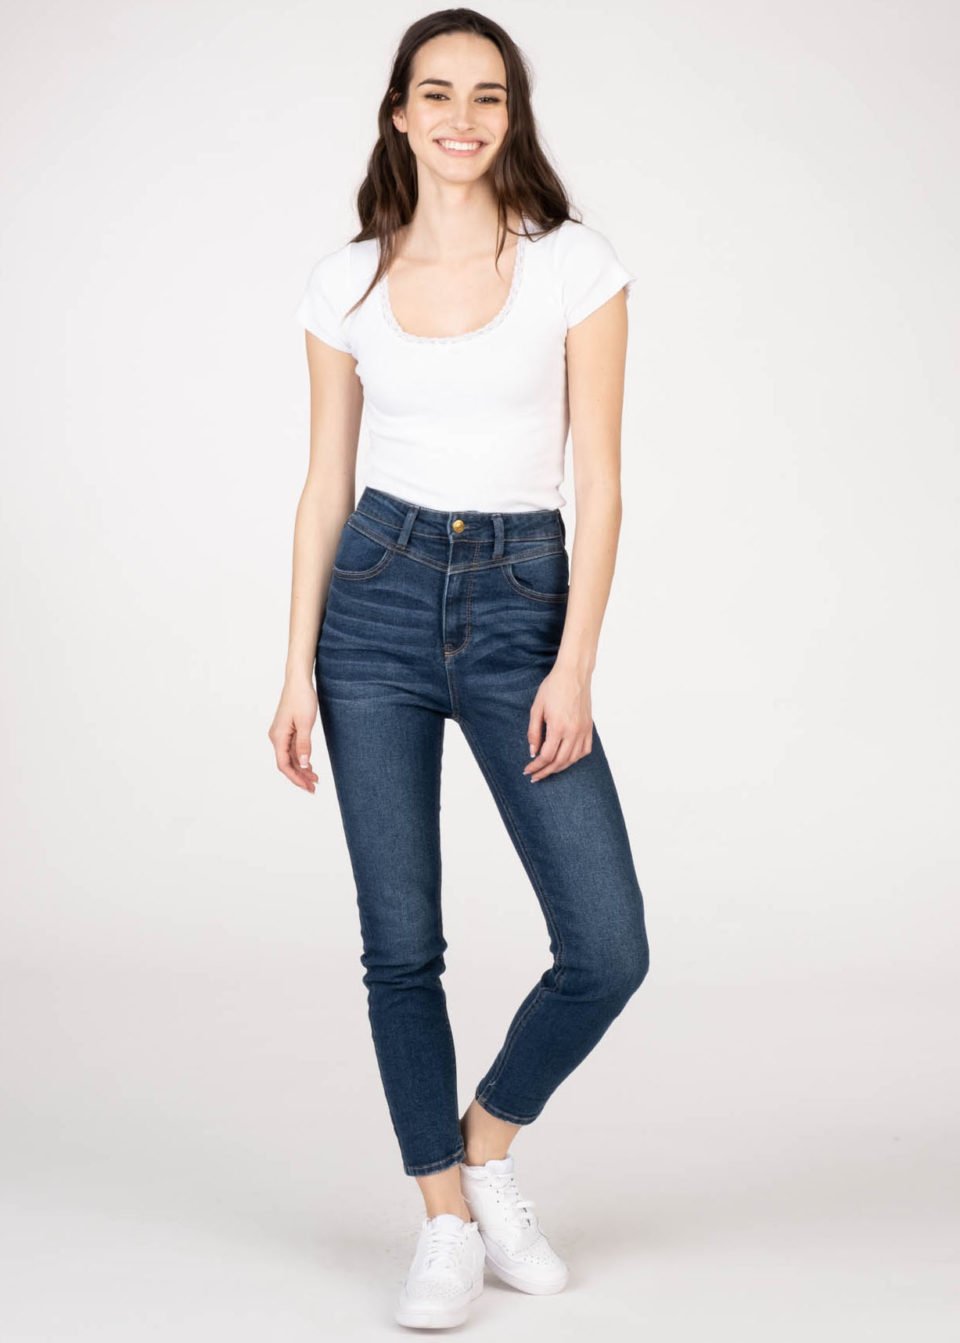 New – Vanilla Star Jeans